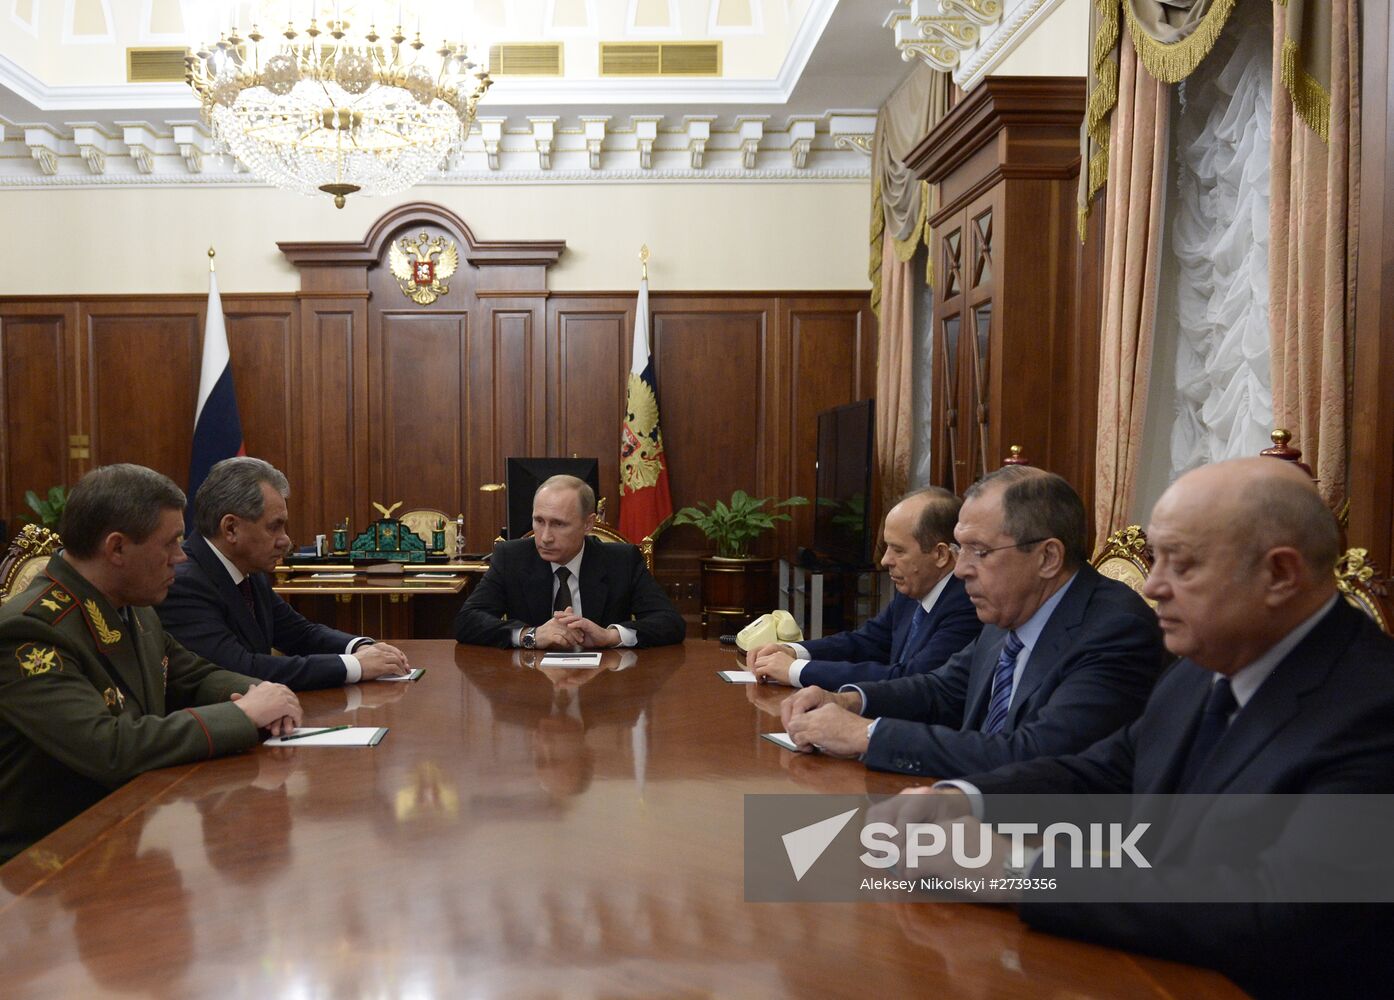 Russian President Vladimir Putin chairs meeting in the Kremlin